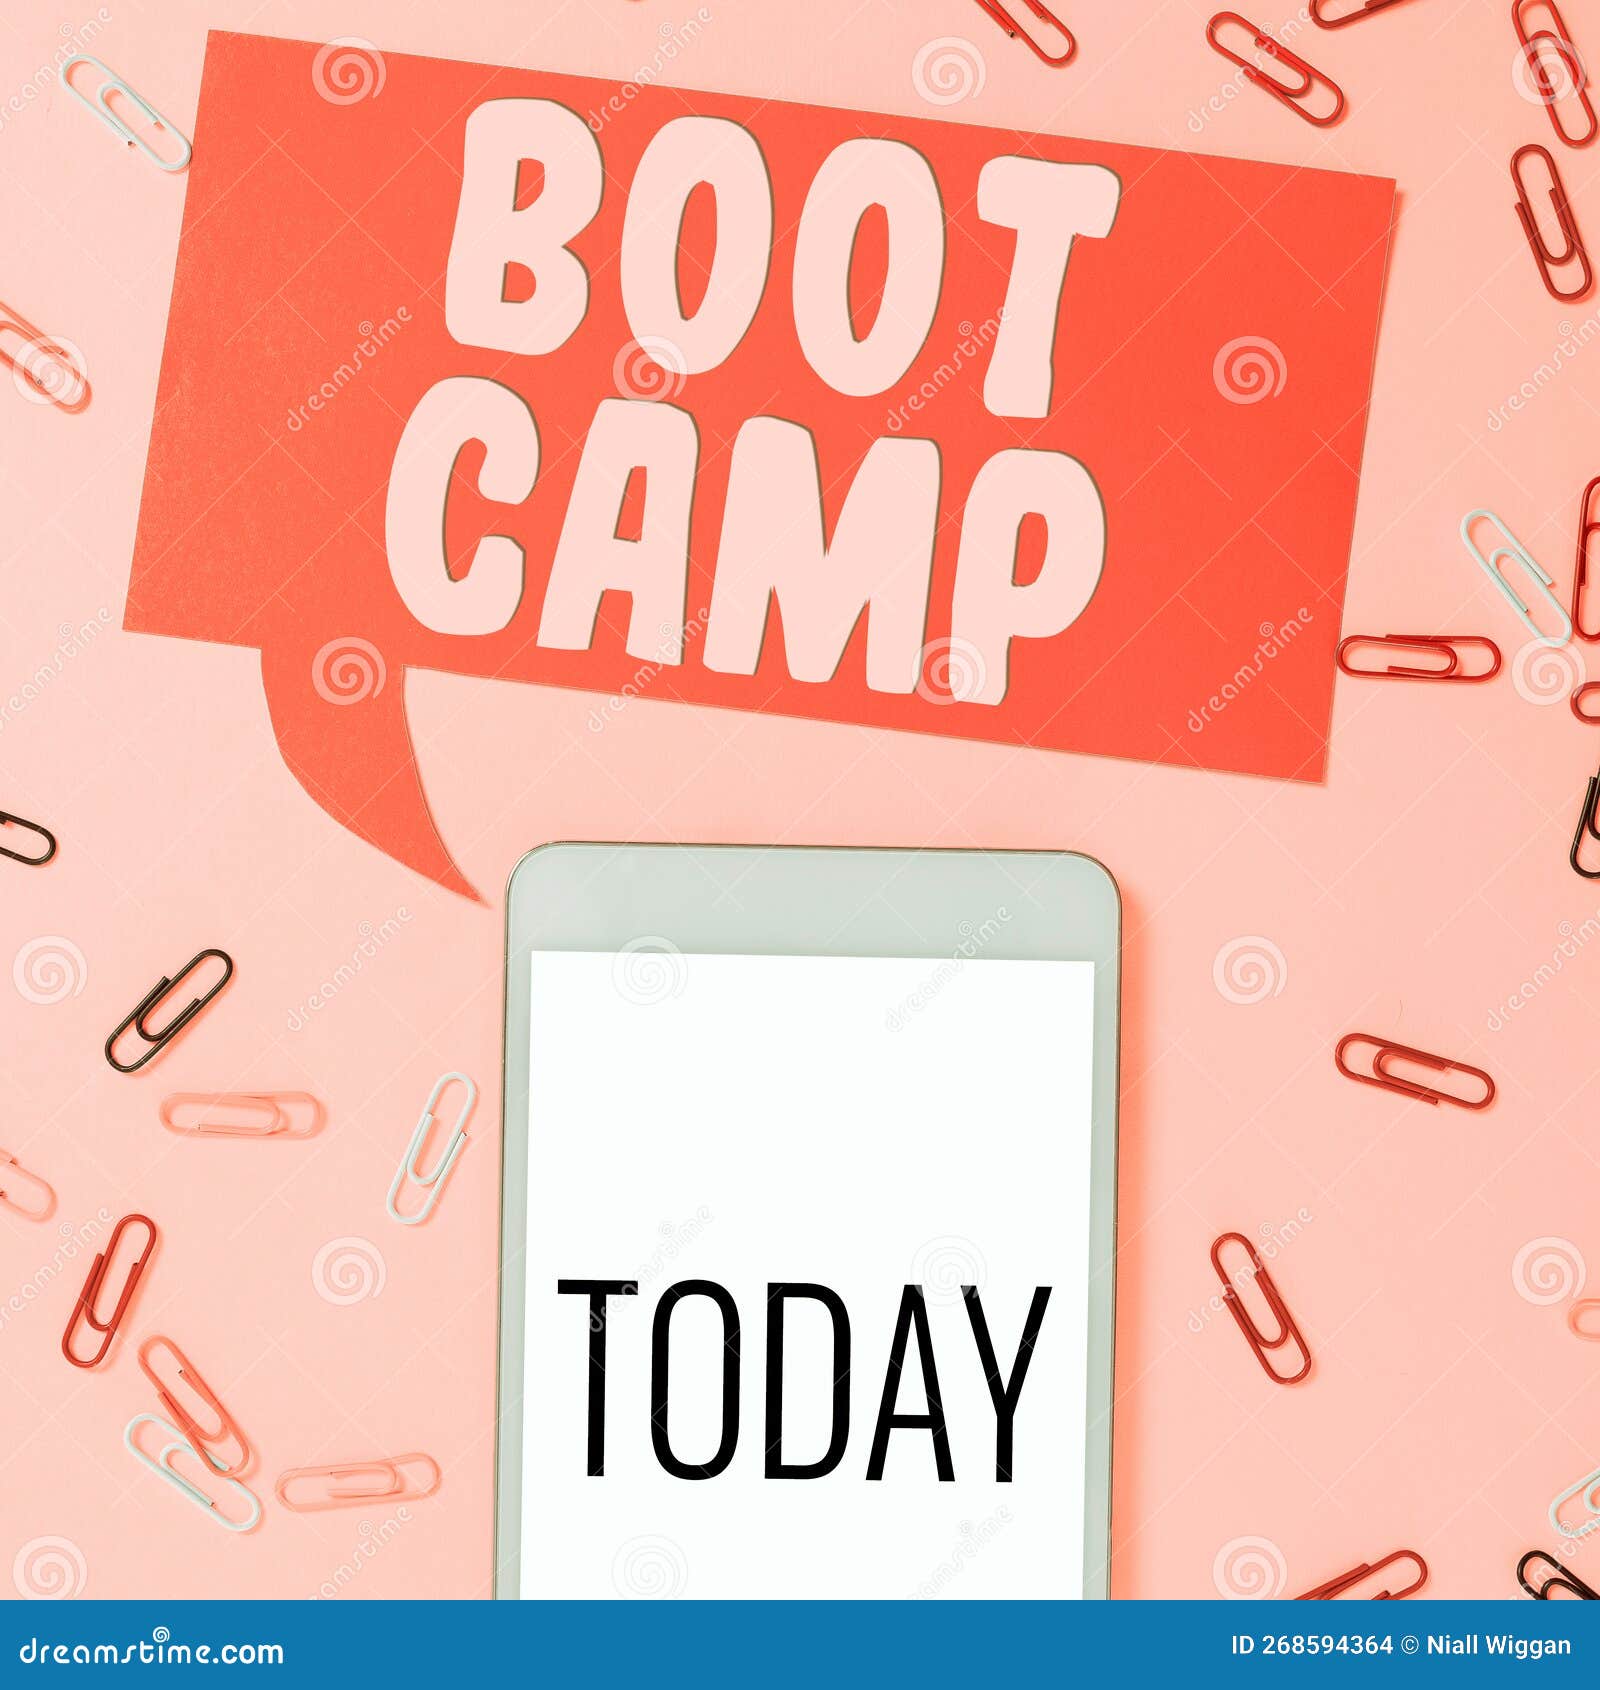 Boot Camp Text Stock Photos - Free & Royalty-Free Stock Photos